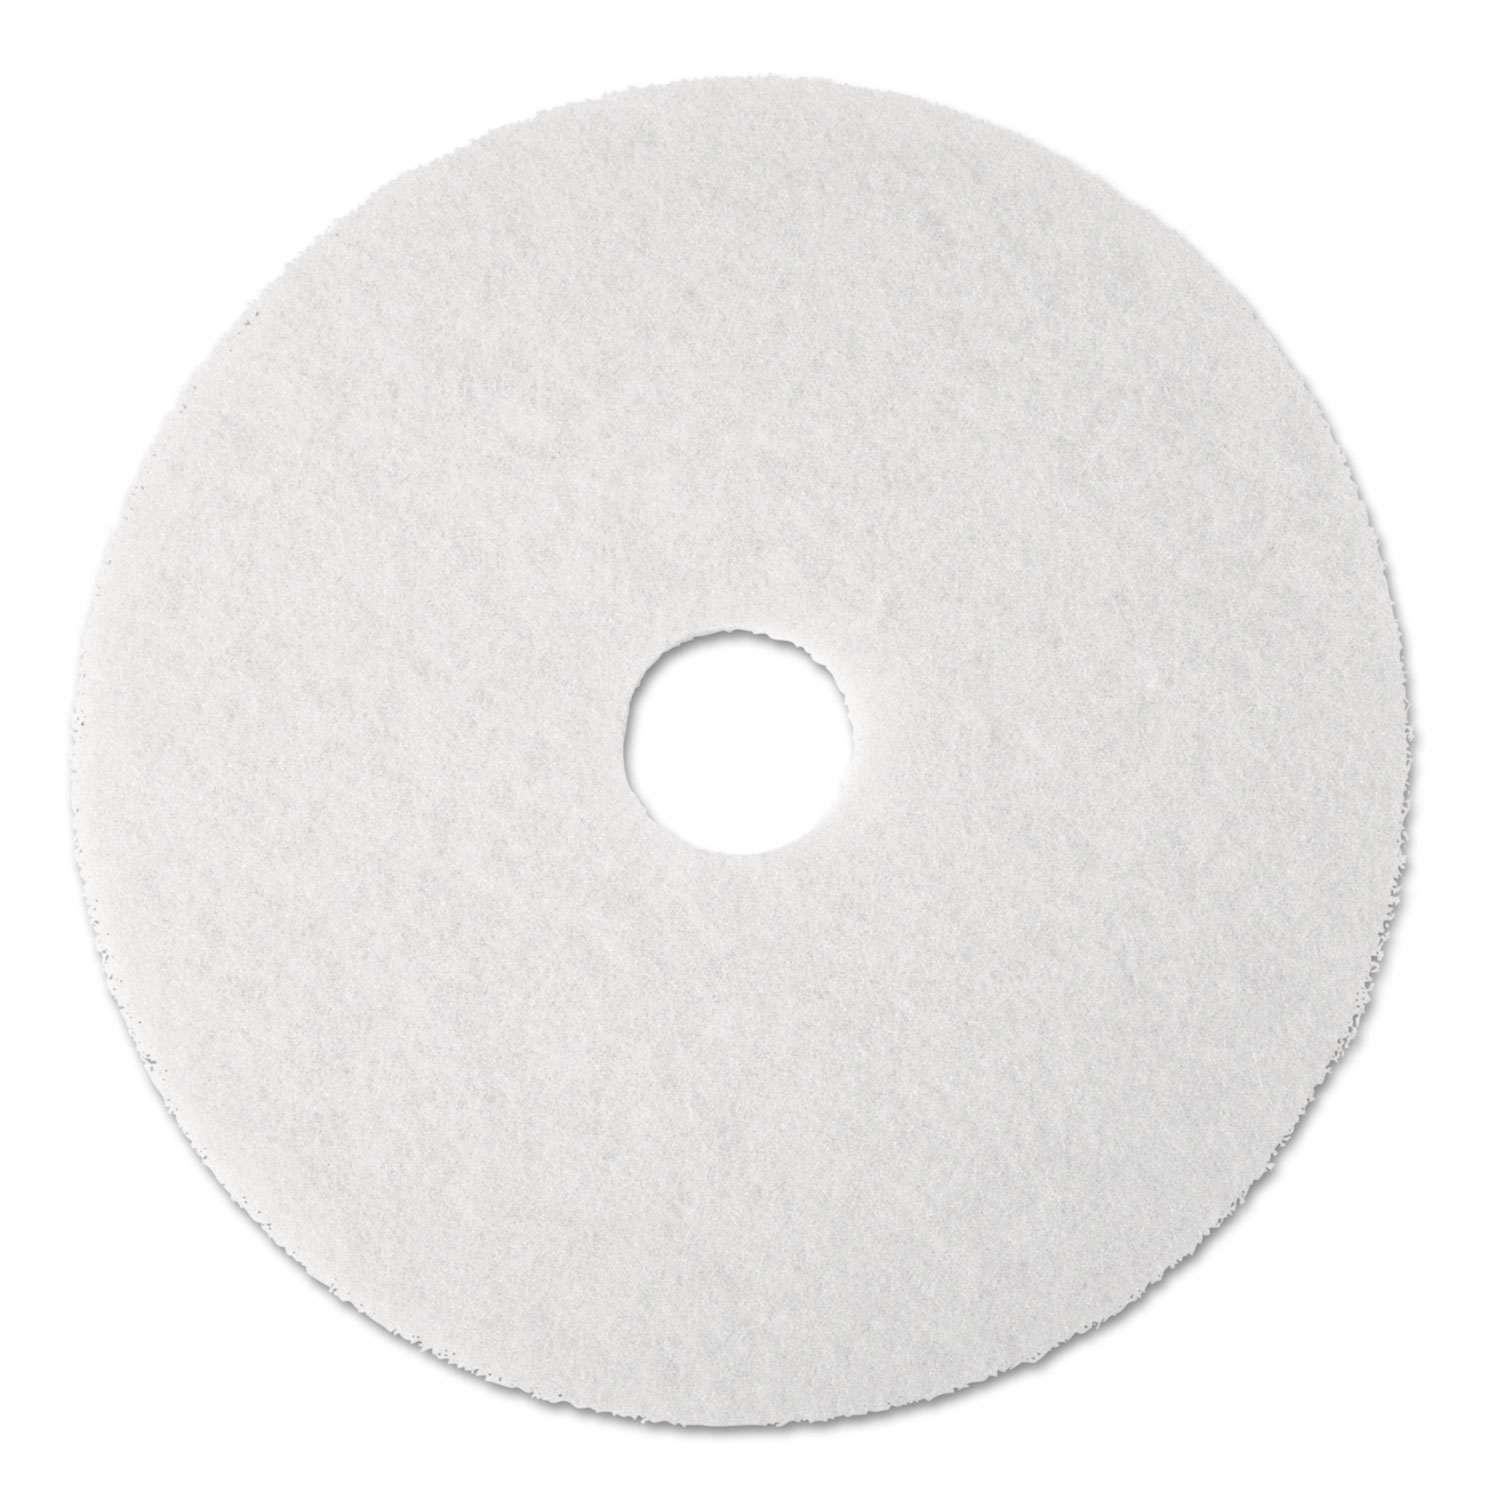  3M 4100 Super Polish Floor Pad 4100, 19 Diameter, White, 5/Carton (MMM08483) 